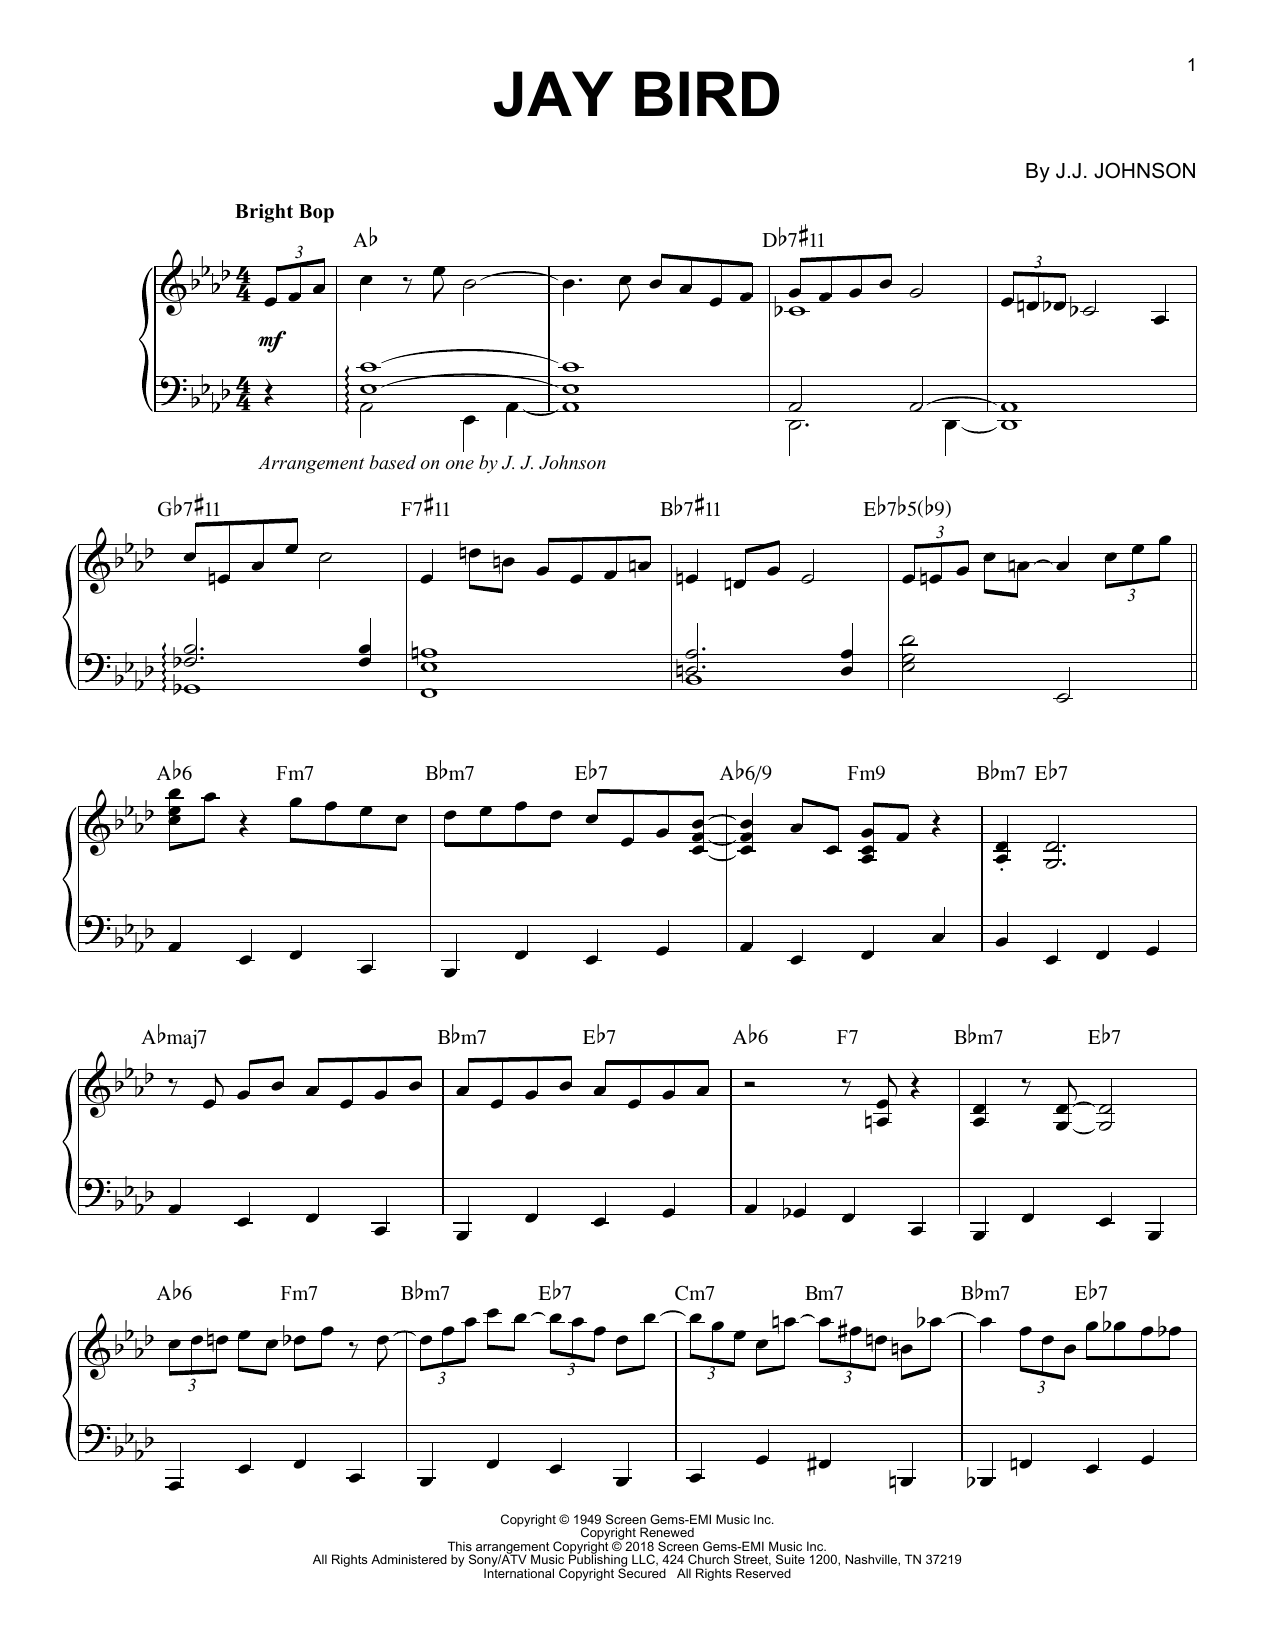 J.J. Johnson Jay Bird Sheet Music Notes & Chords for Piano - Download or Print PDF